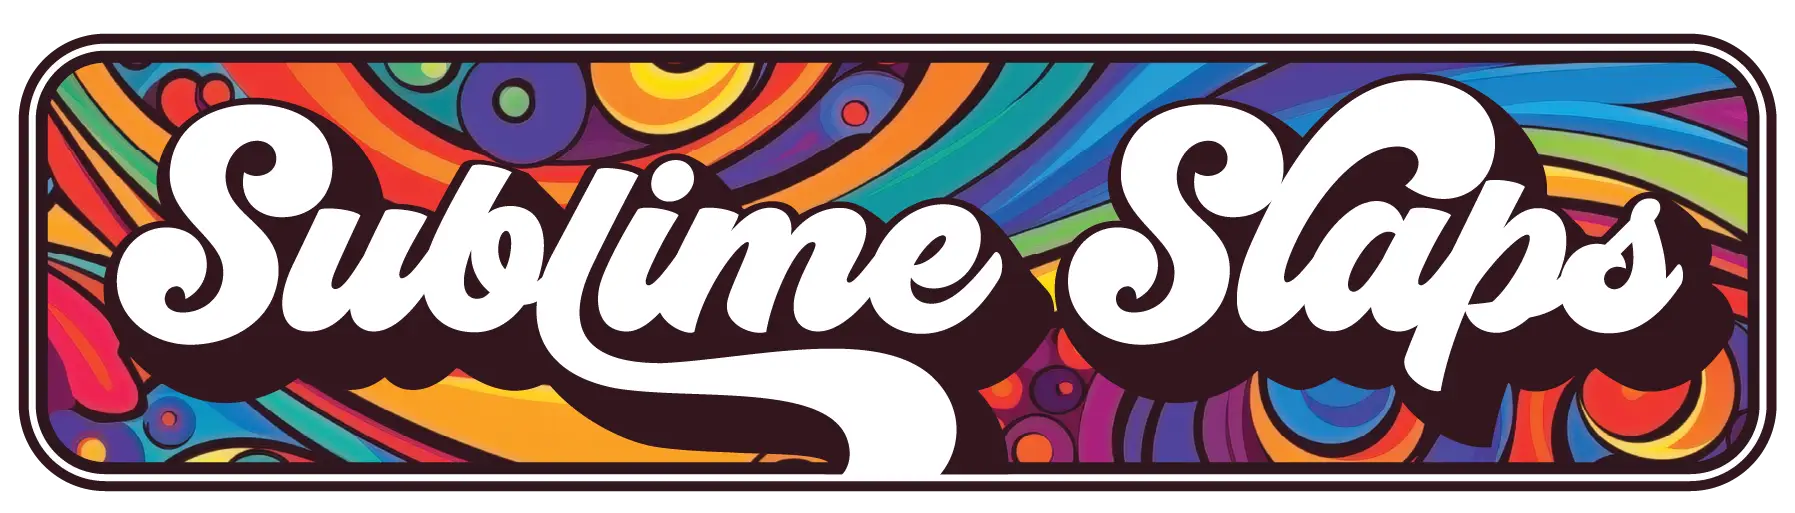 Sublime Slaps Logo